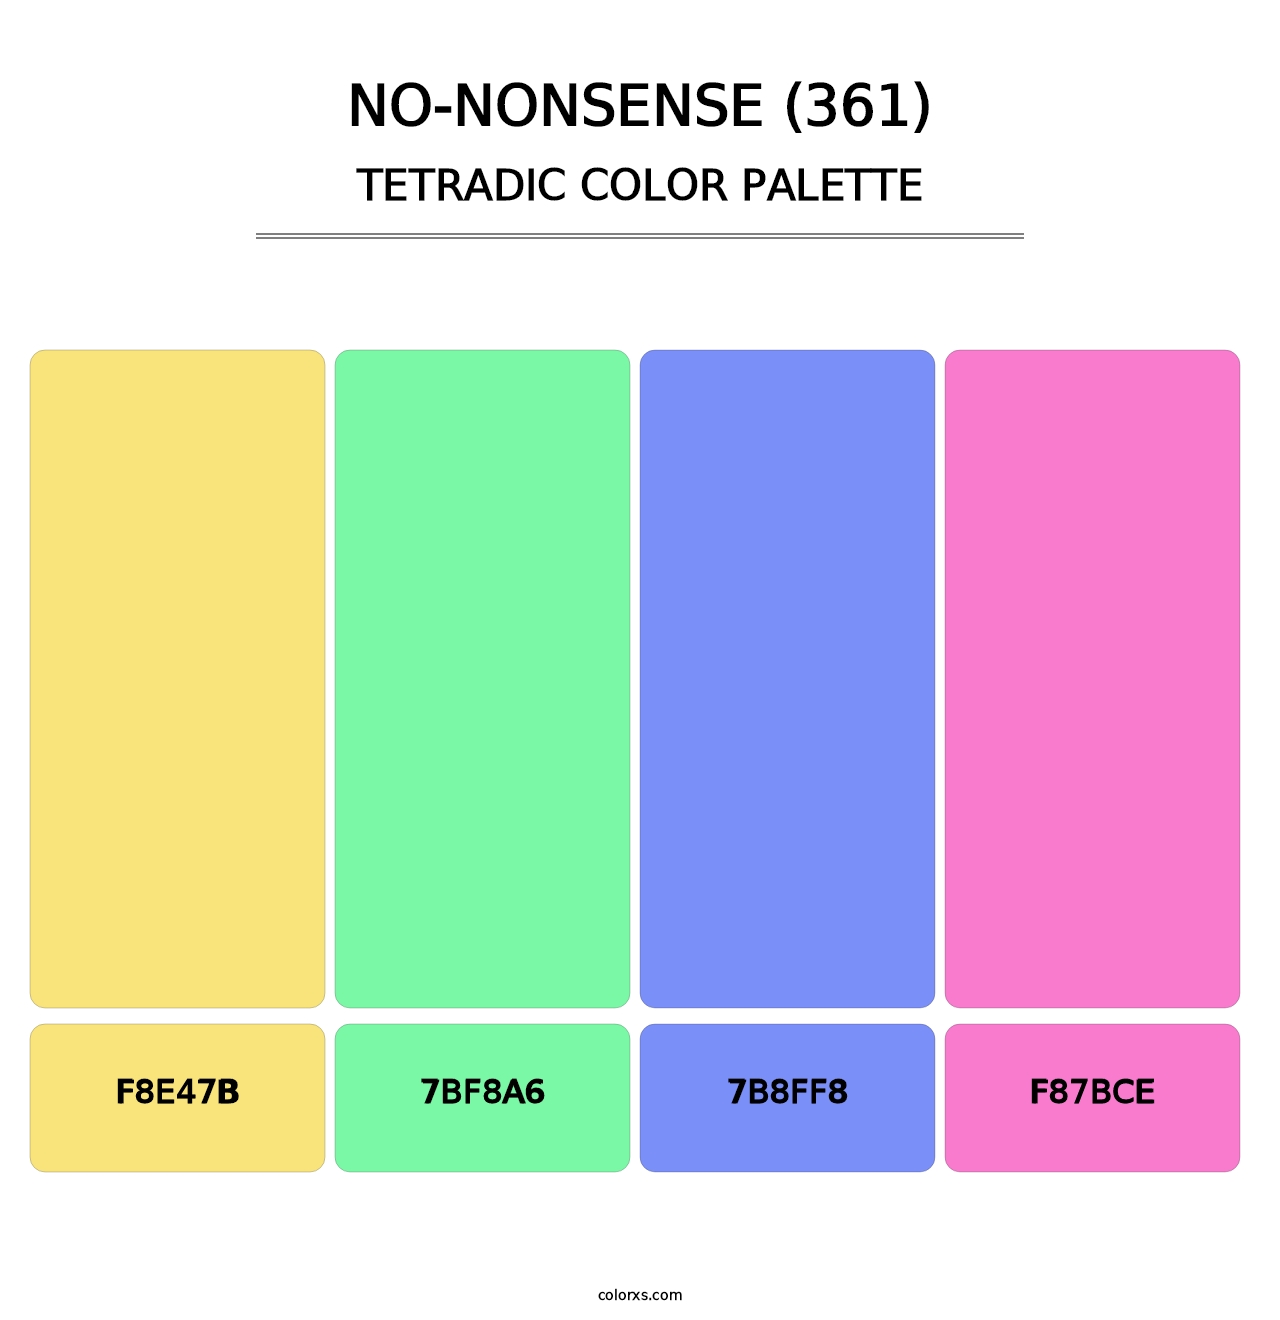 No-Nonsense (361) - Tetradic Color Palette